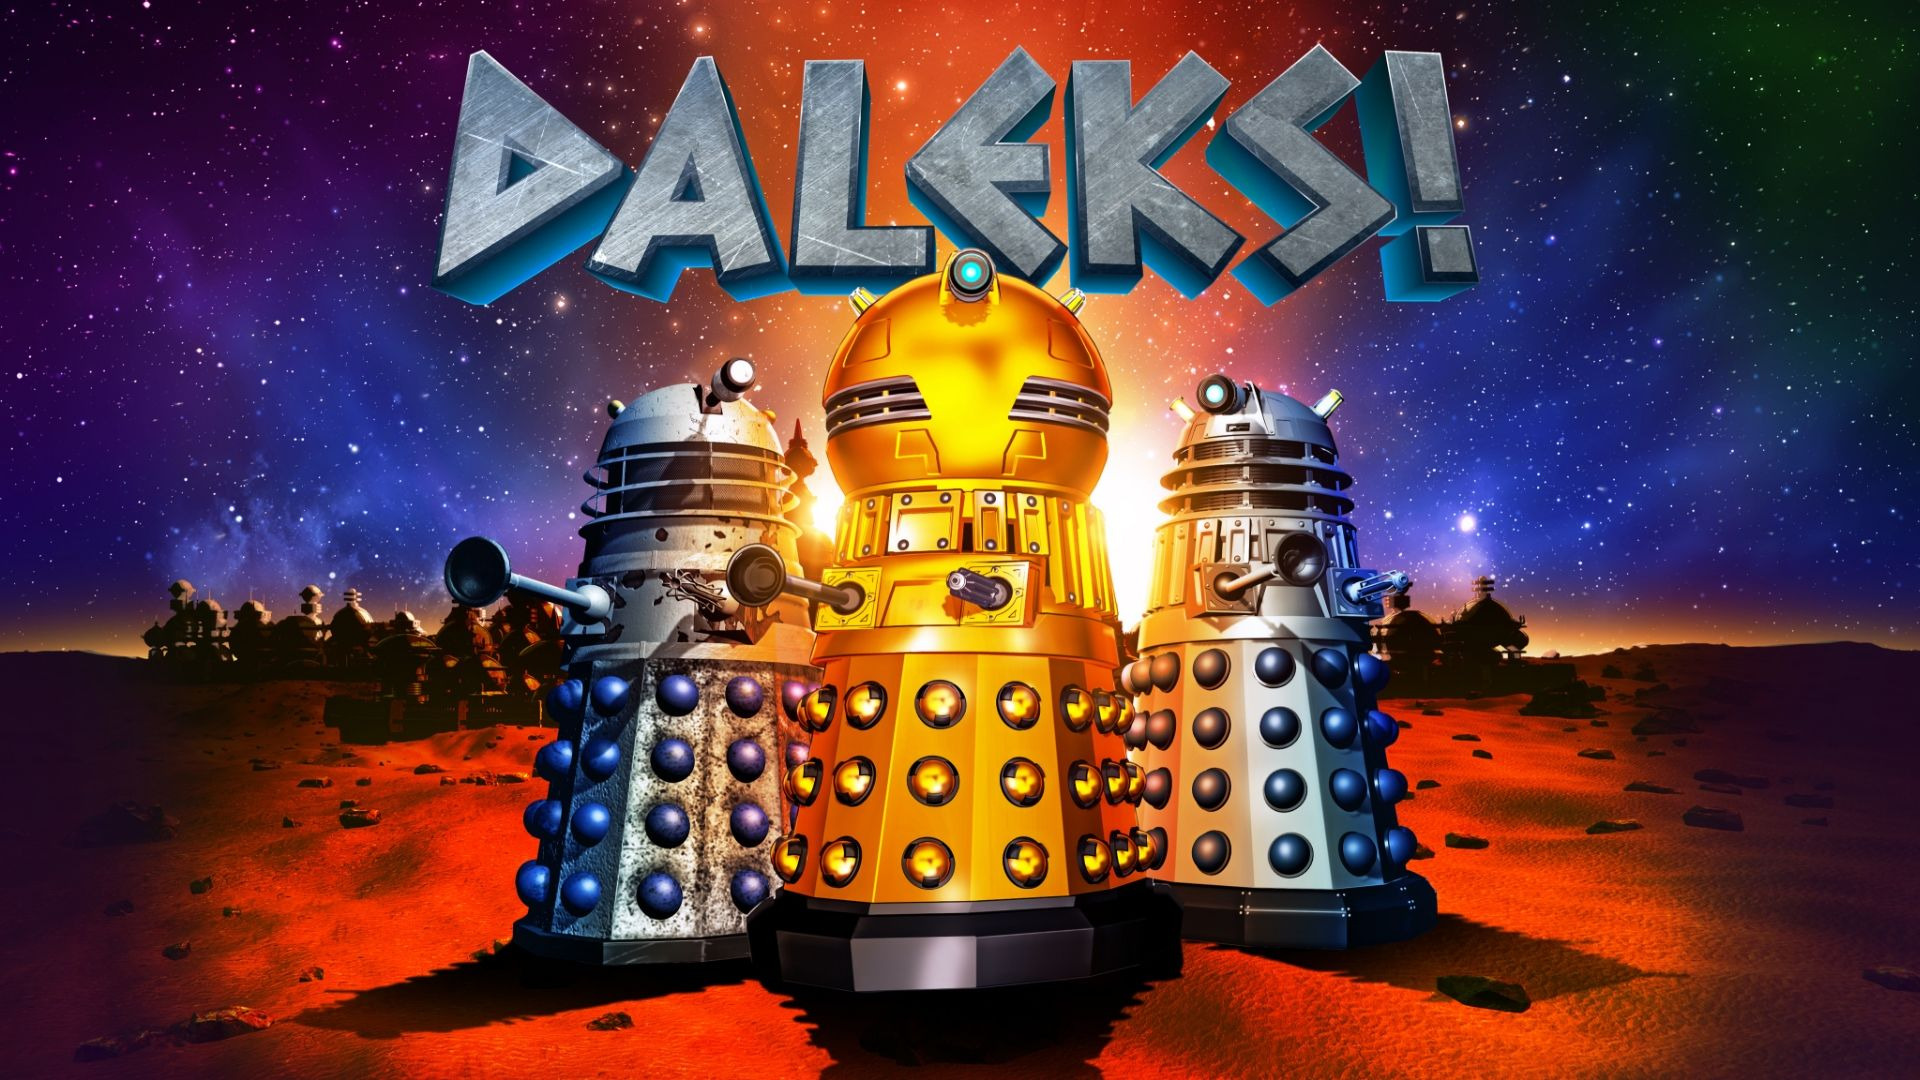 Show Daleks!